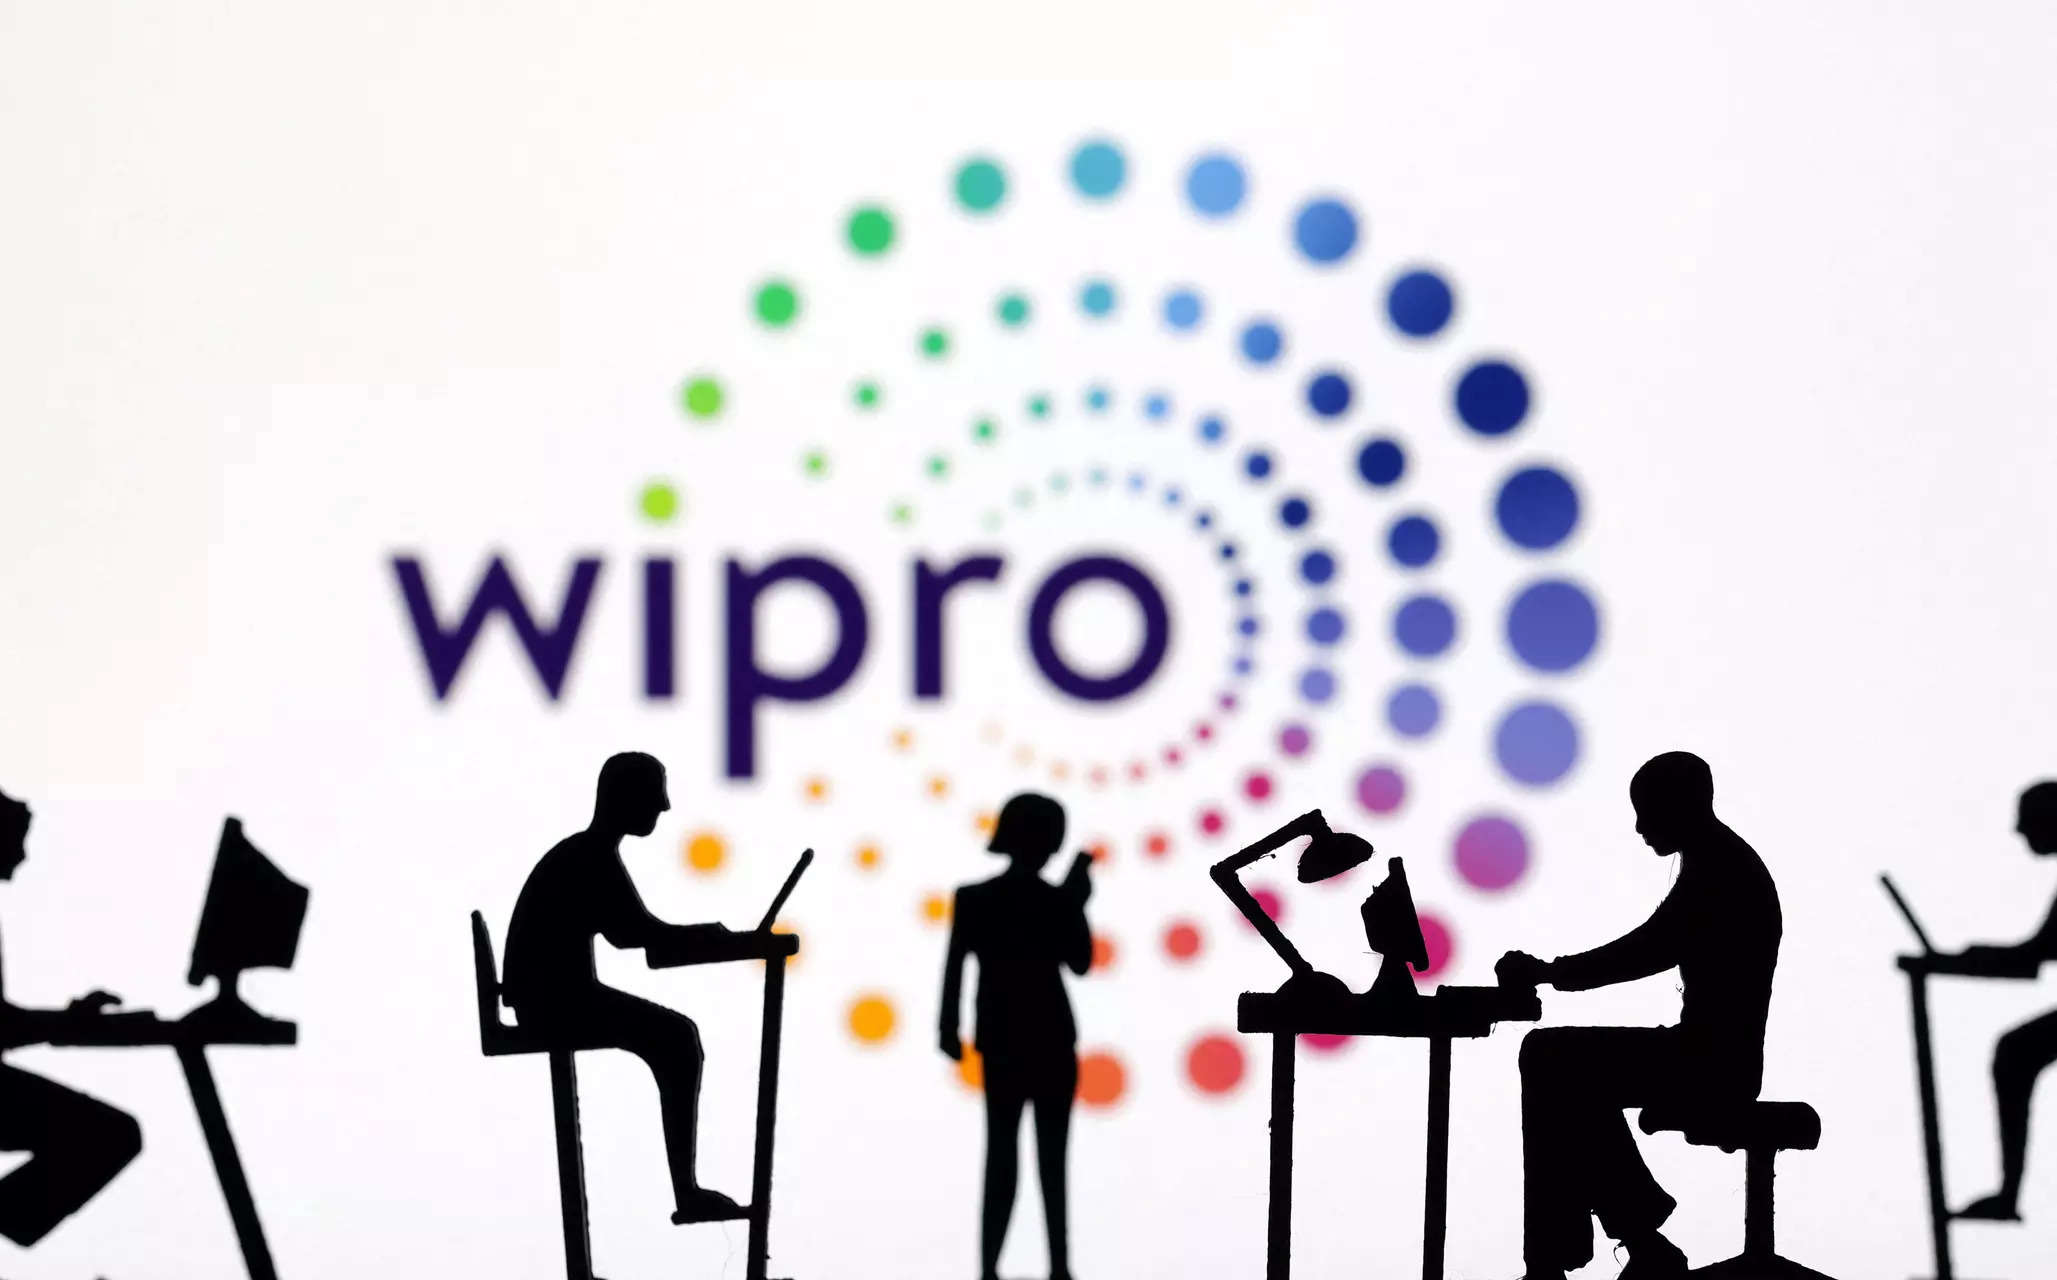 Wipro shares CLSA